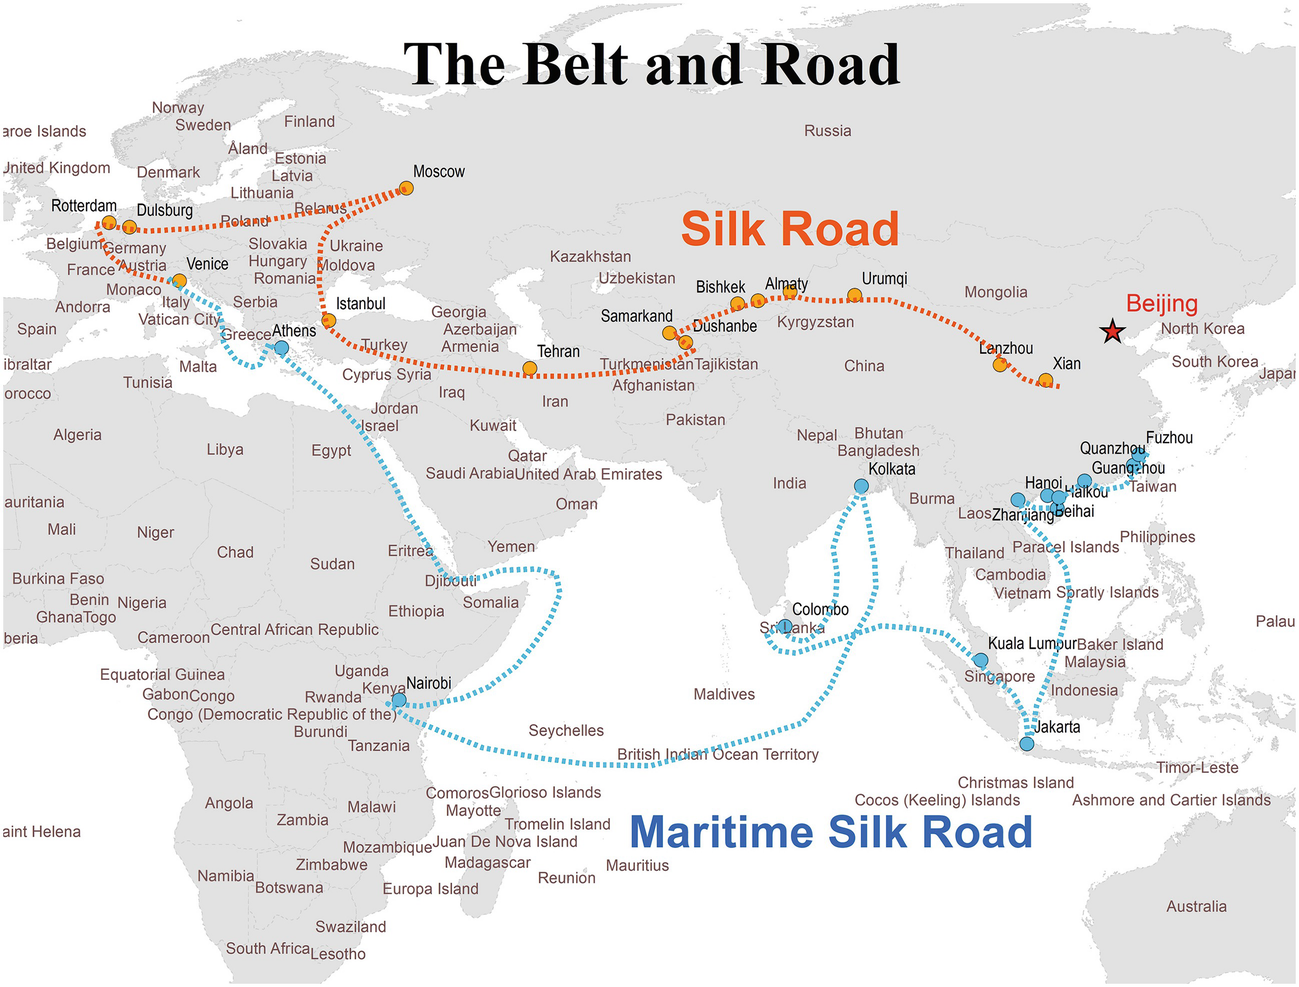 The New Silk Road Springerlink